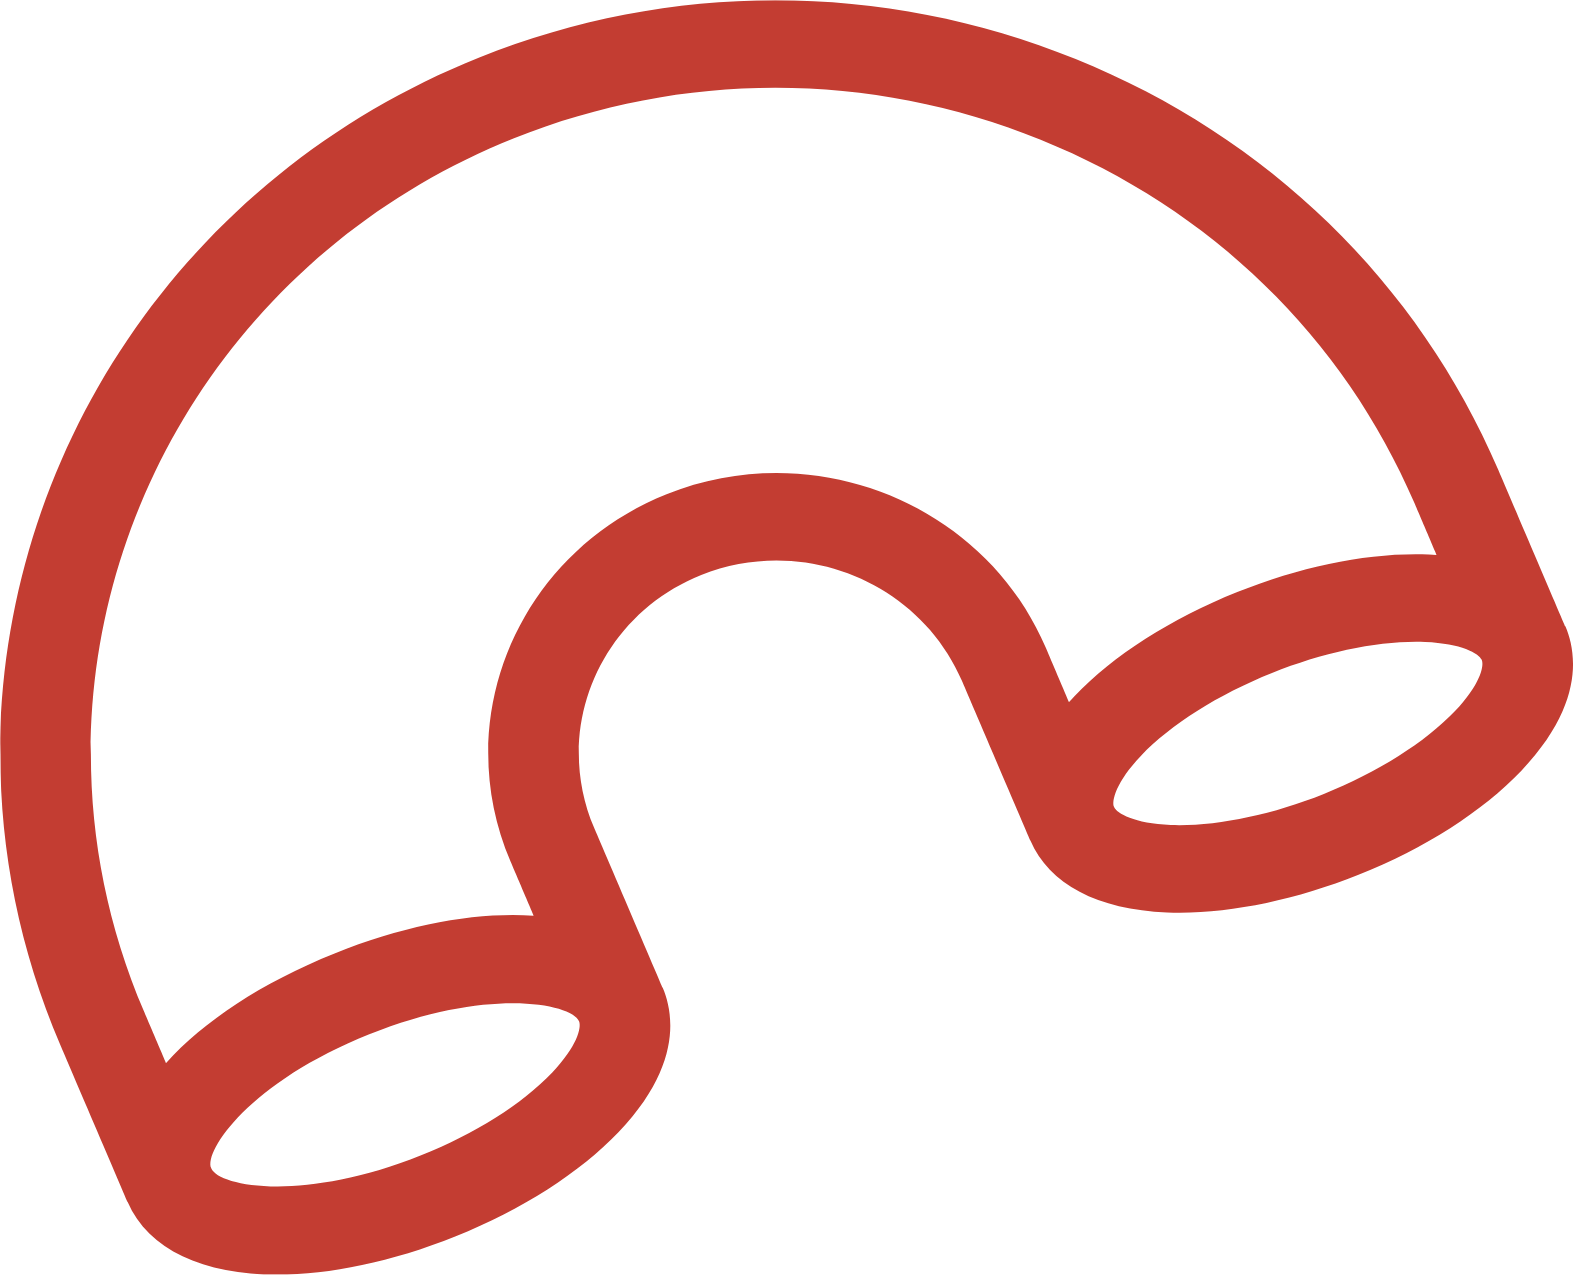 Noodles & Company logo (PNG transparent)